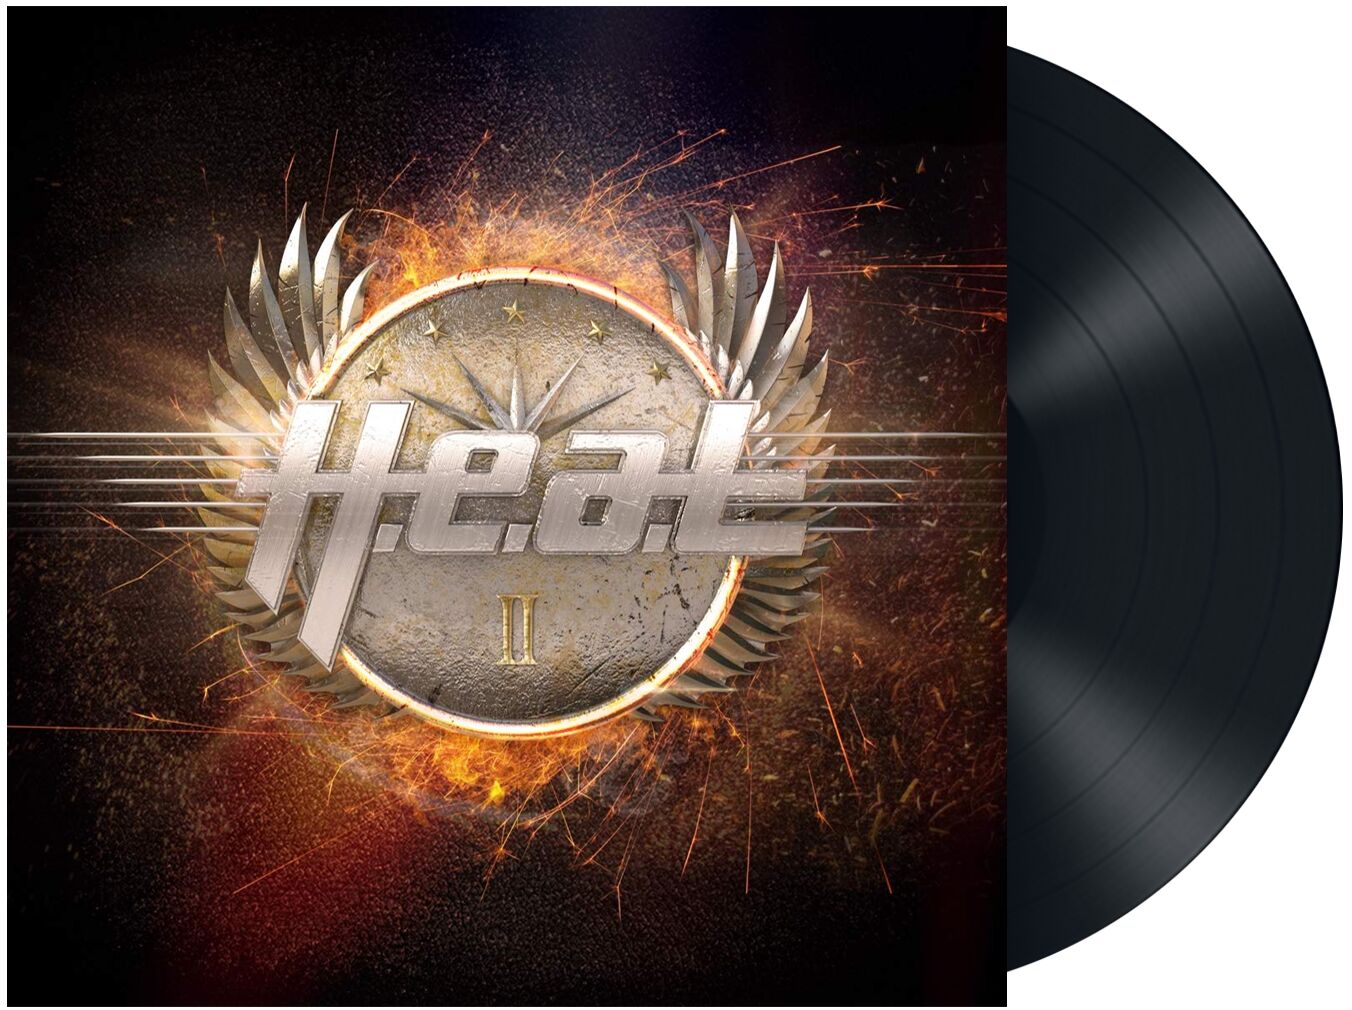 H e a d 1. Группа h.e.a.t. H.E.A.T II. H.E.A.T. Force majeure. Heat Heat II album.